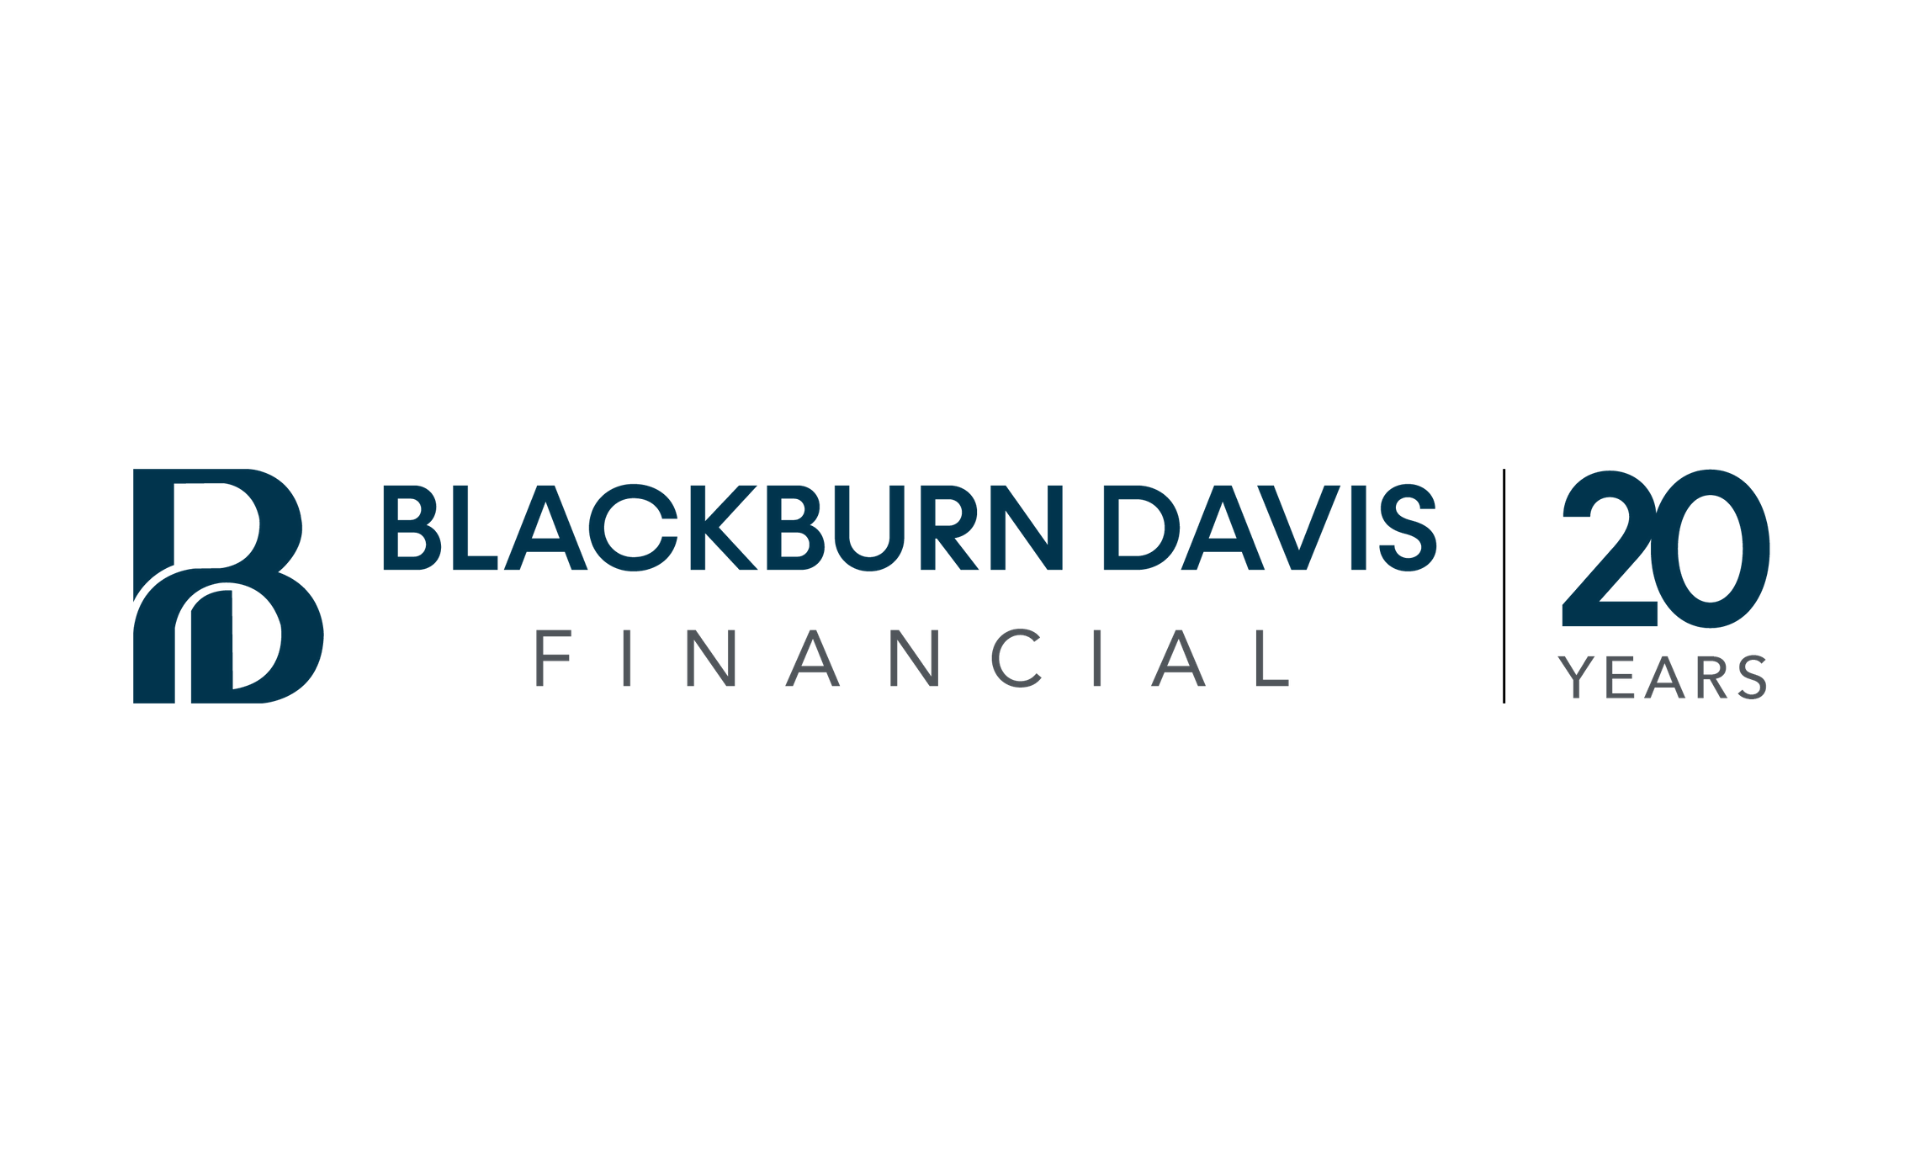 Blackburn Davis Financial's 20 year anniversary